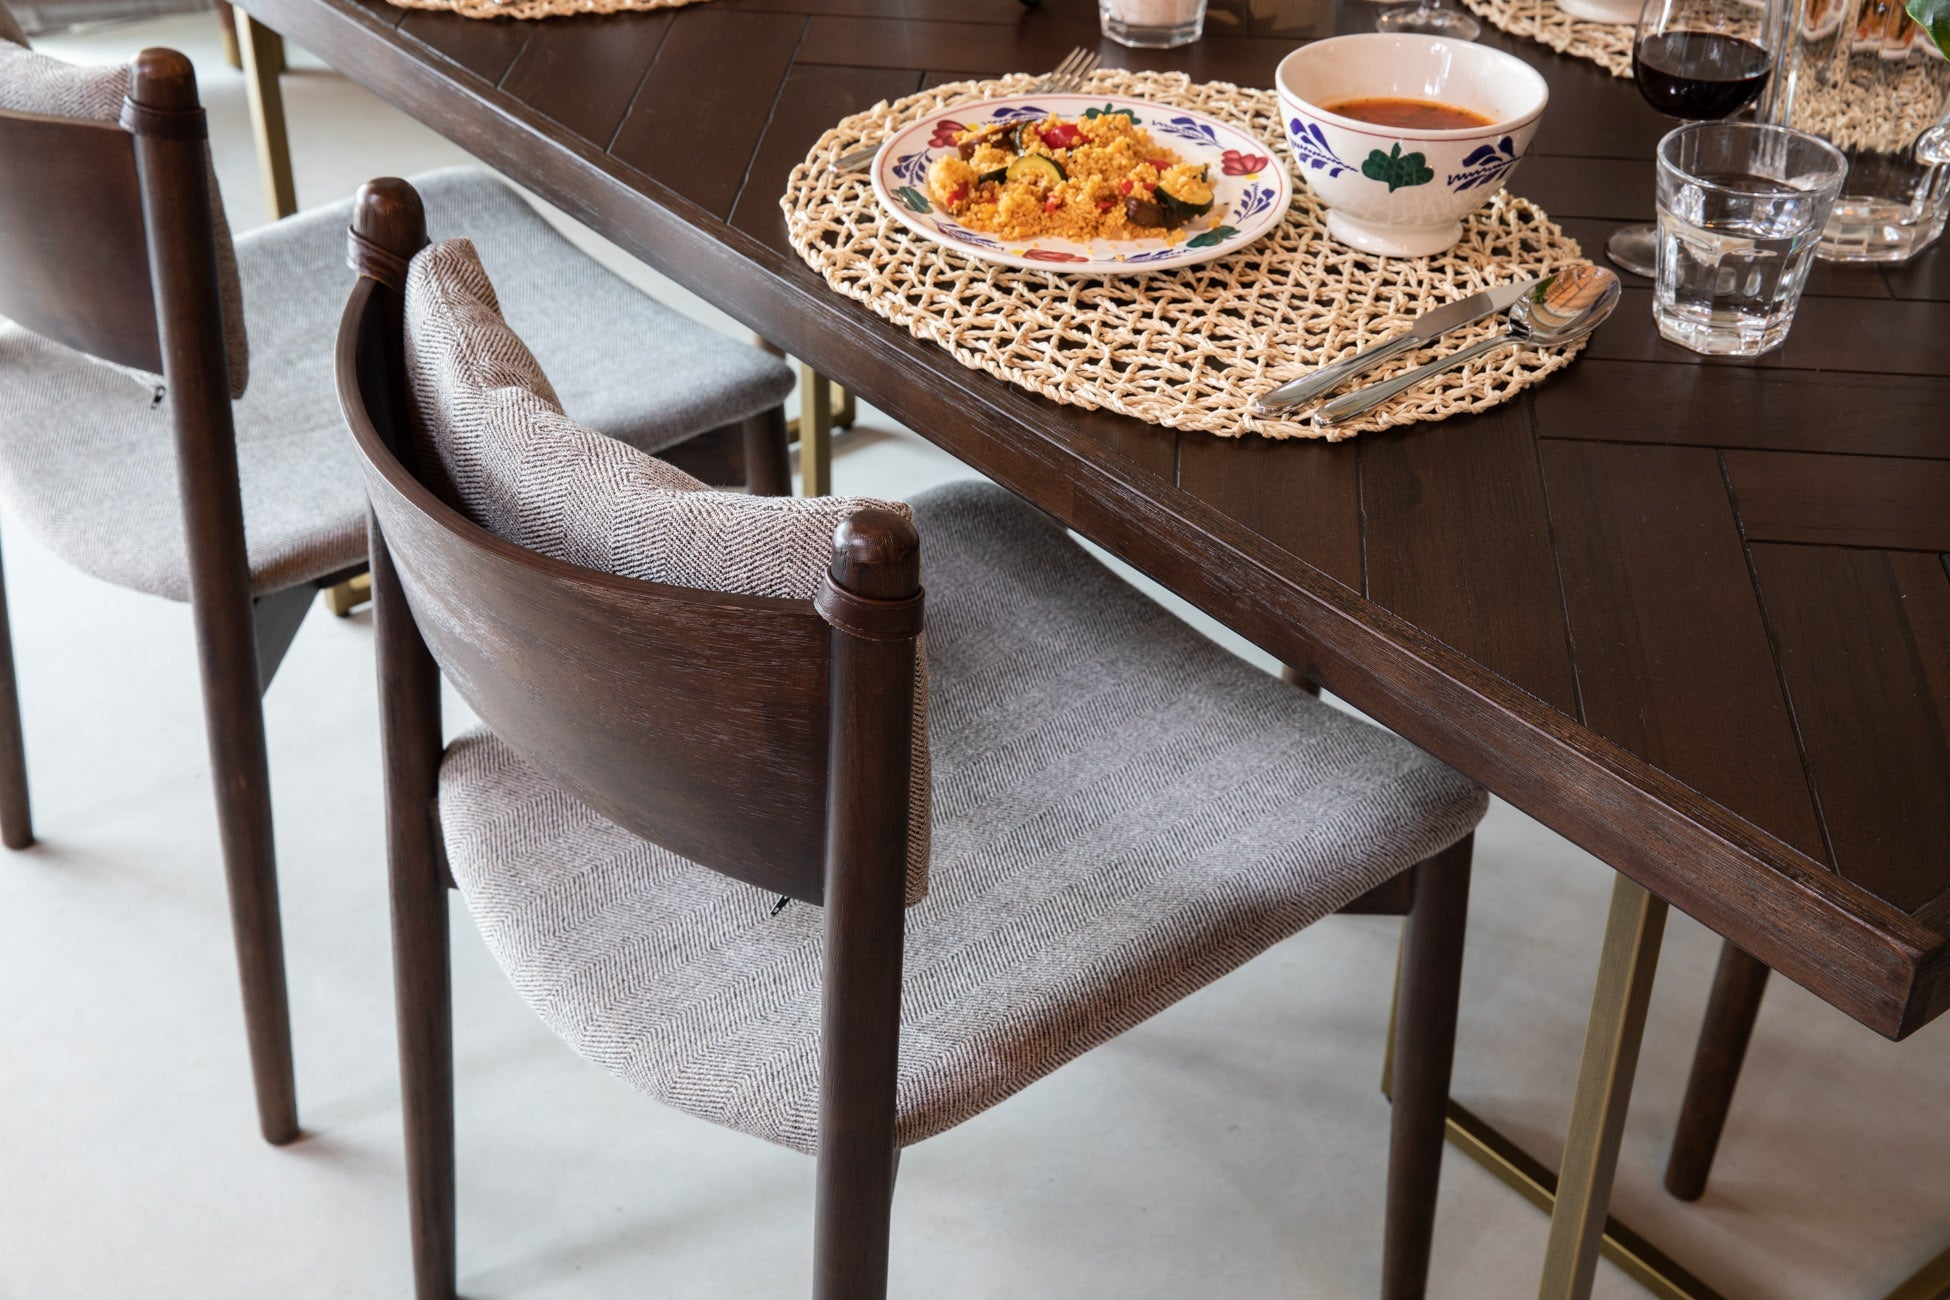 TORRANCE chair beige, Dutchbone, Eye on Design